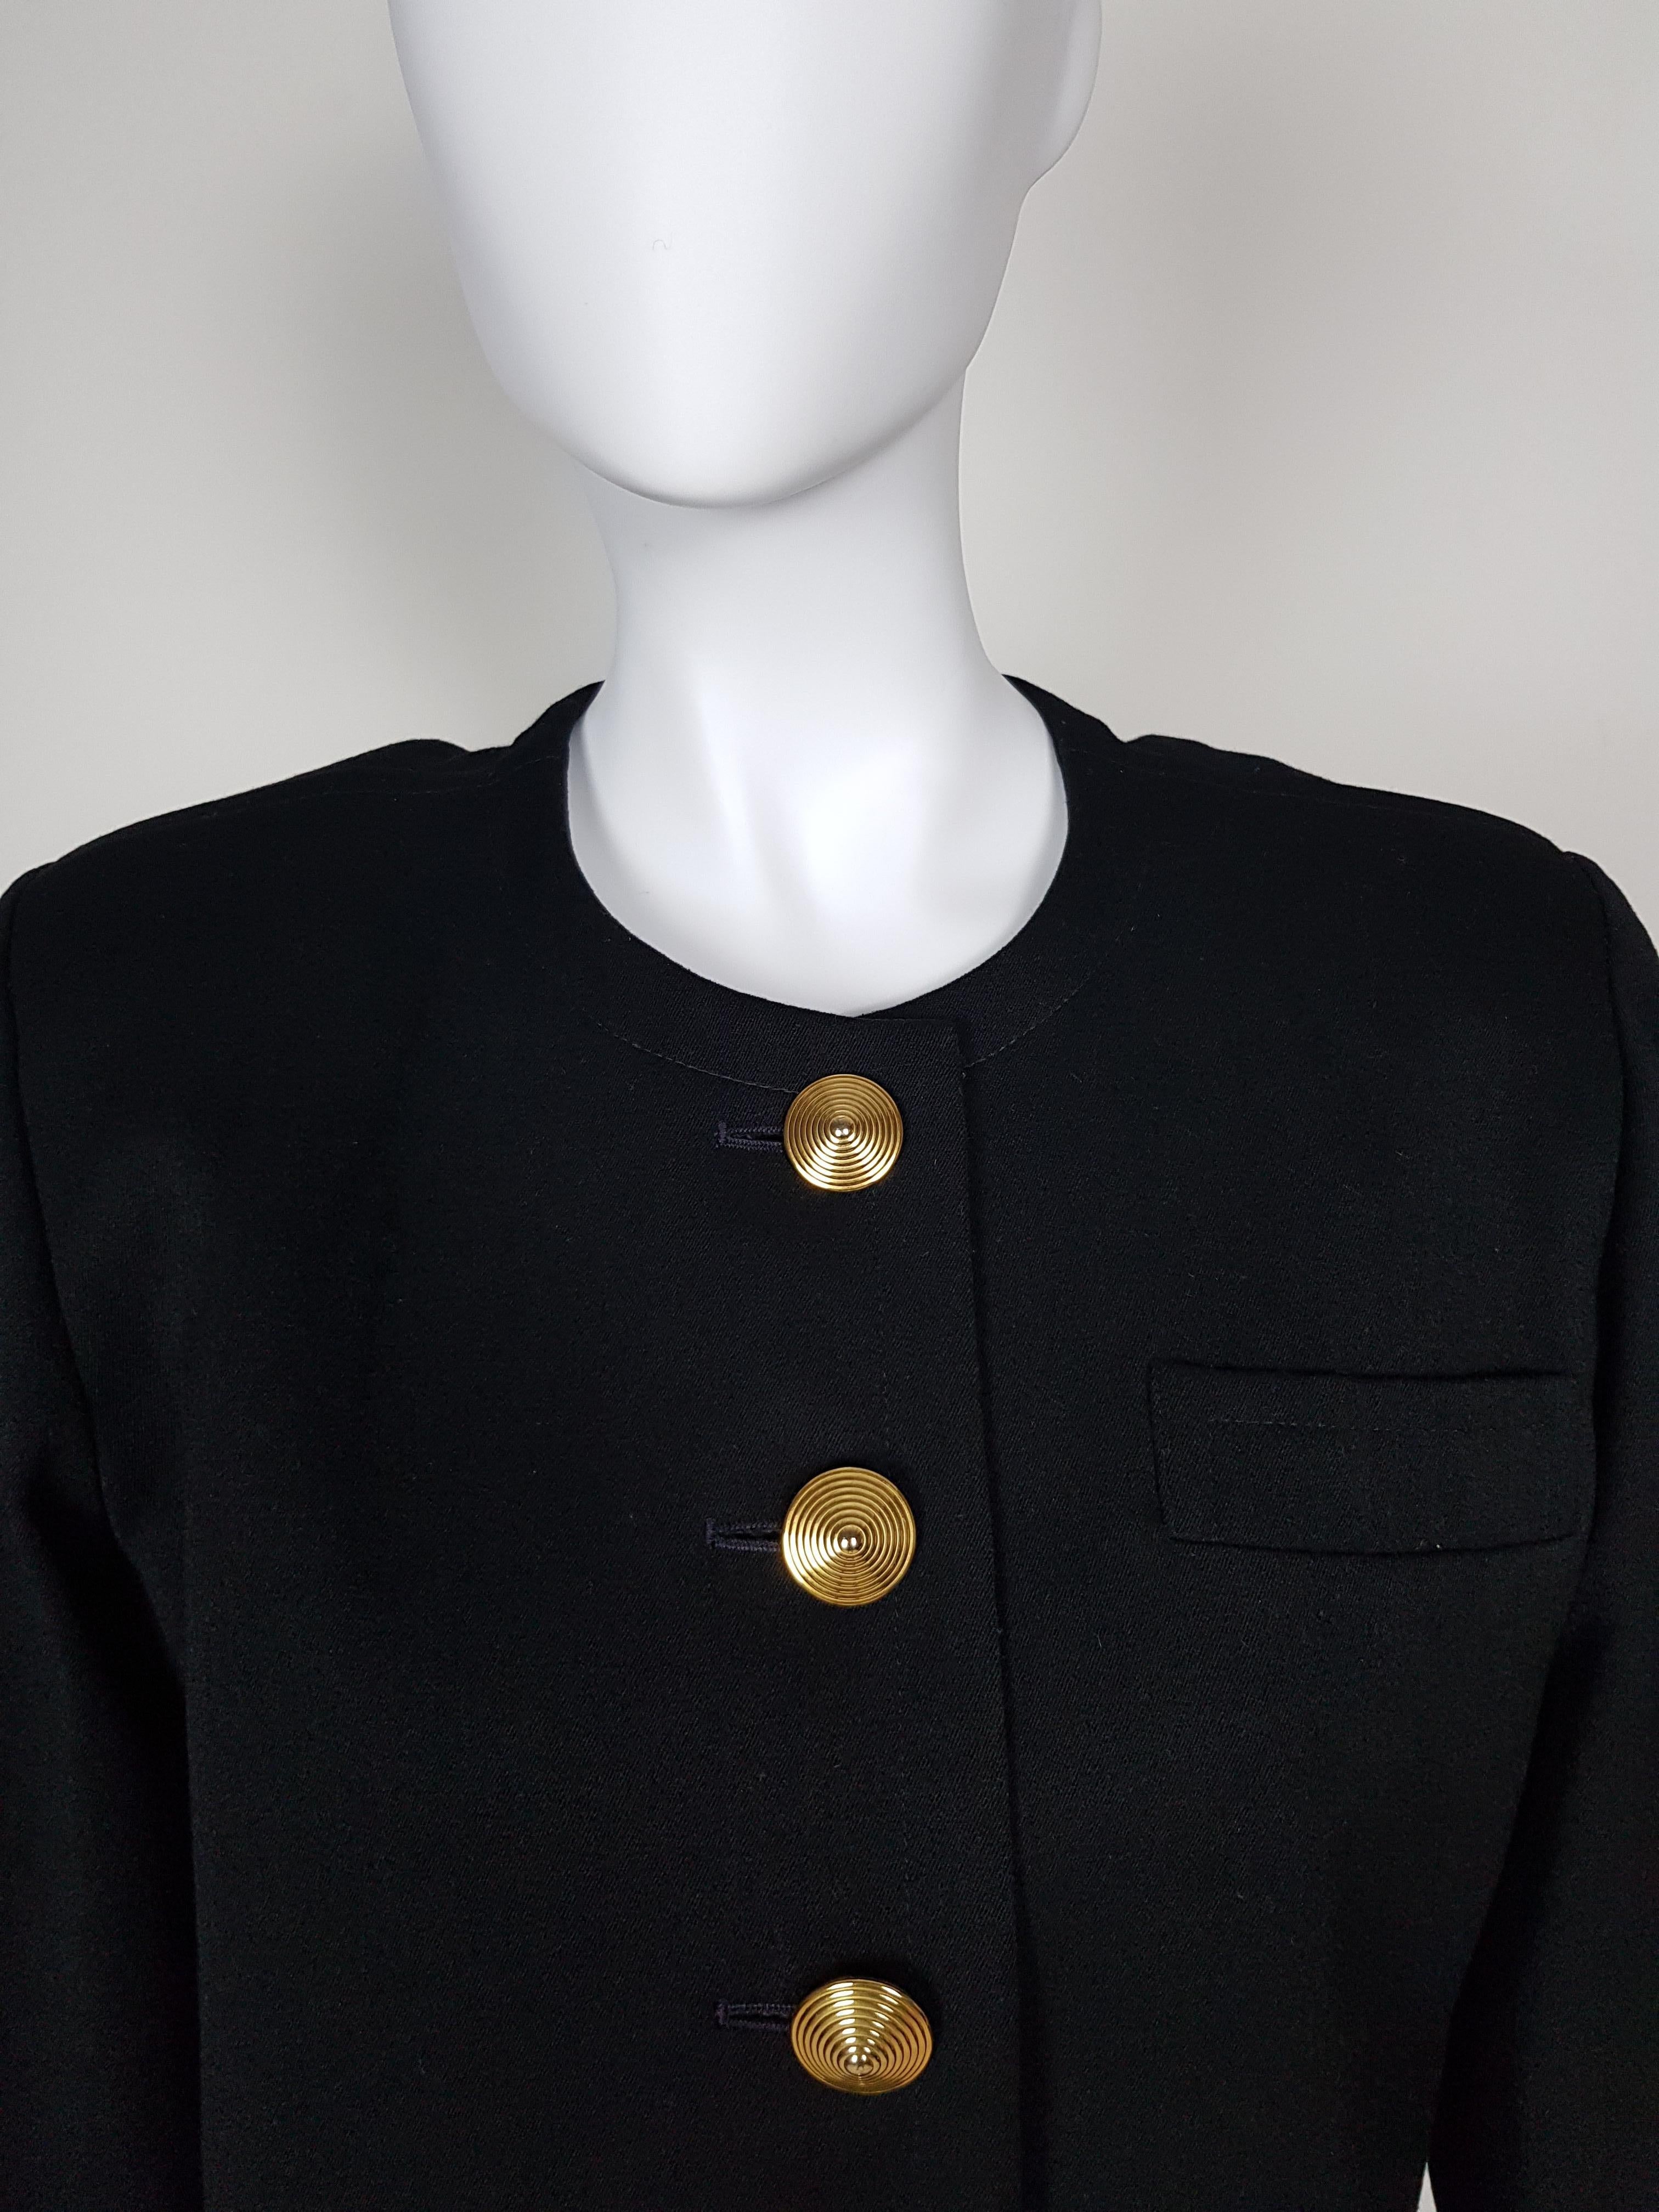 black blazer gold buttons